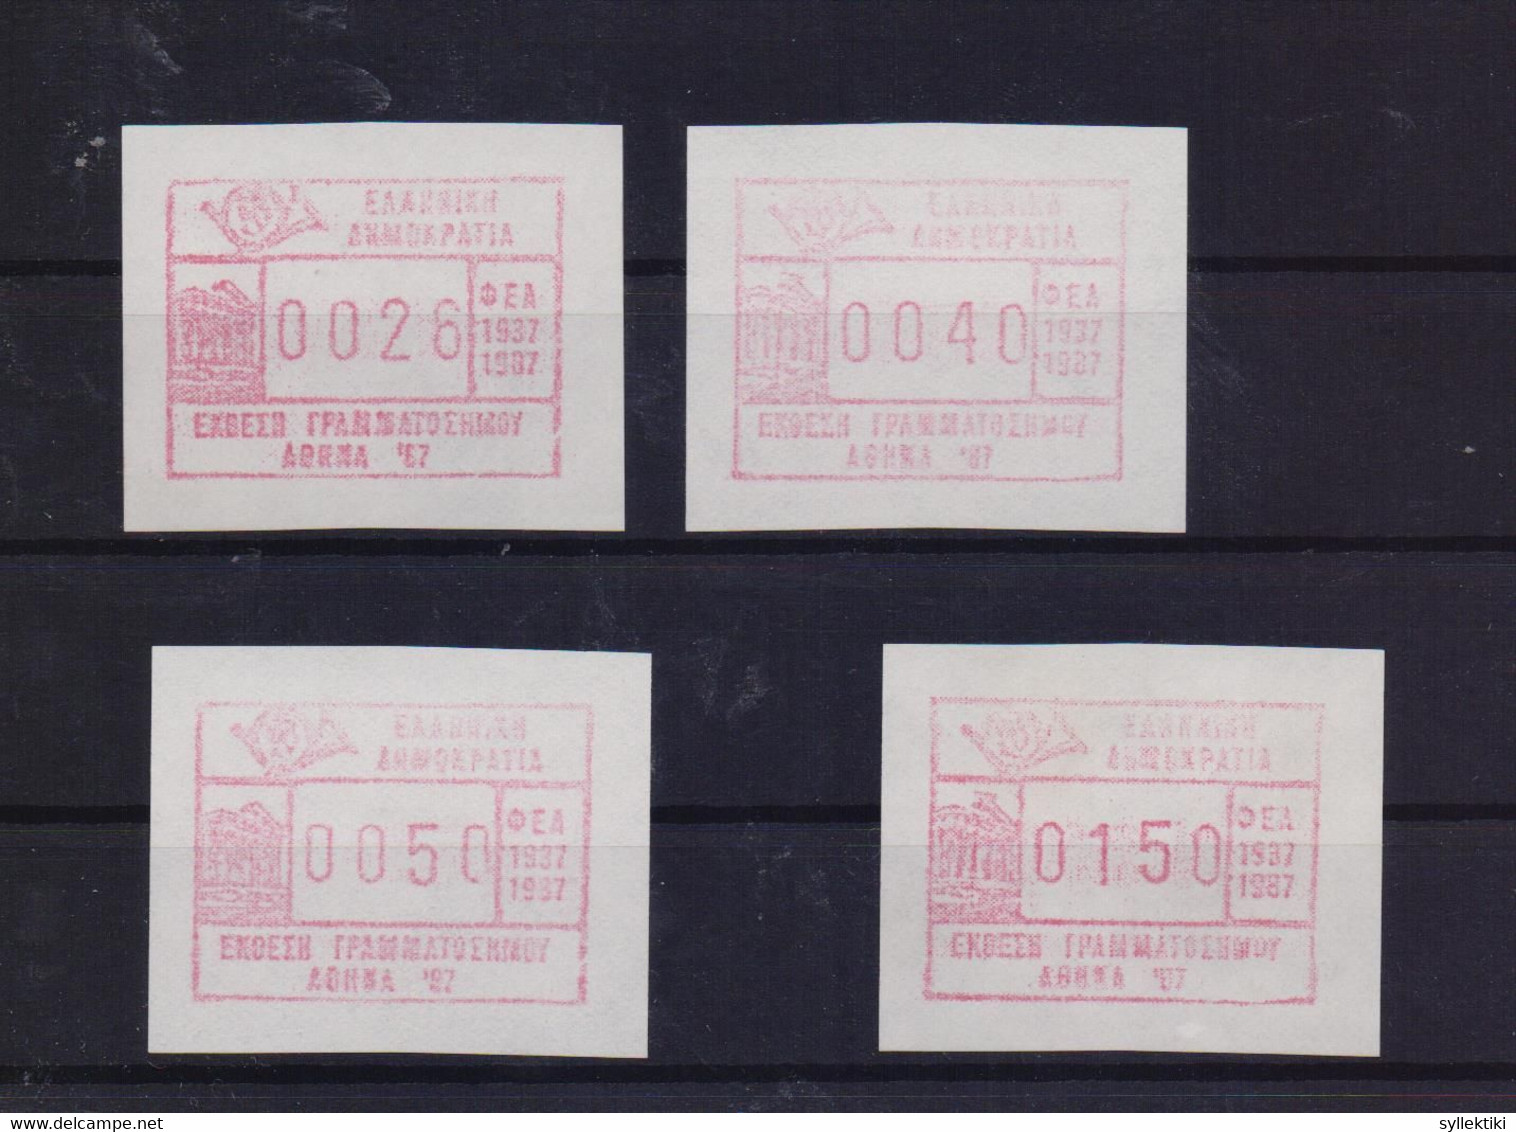 GREECE 1987 ATM FRAMA ΕΧΗΙΒΙΤΙΟΝ ΑΘΗΝΑ '87 TYPE ΙI COMPLETE SET OF 4 MNH STAMPS - Machine Labels [ATM]